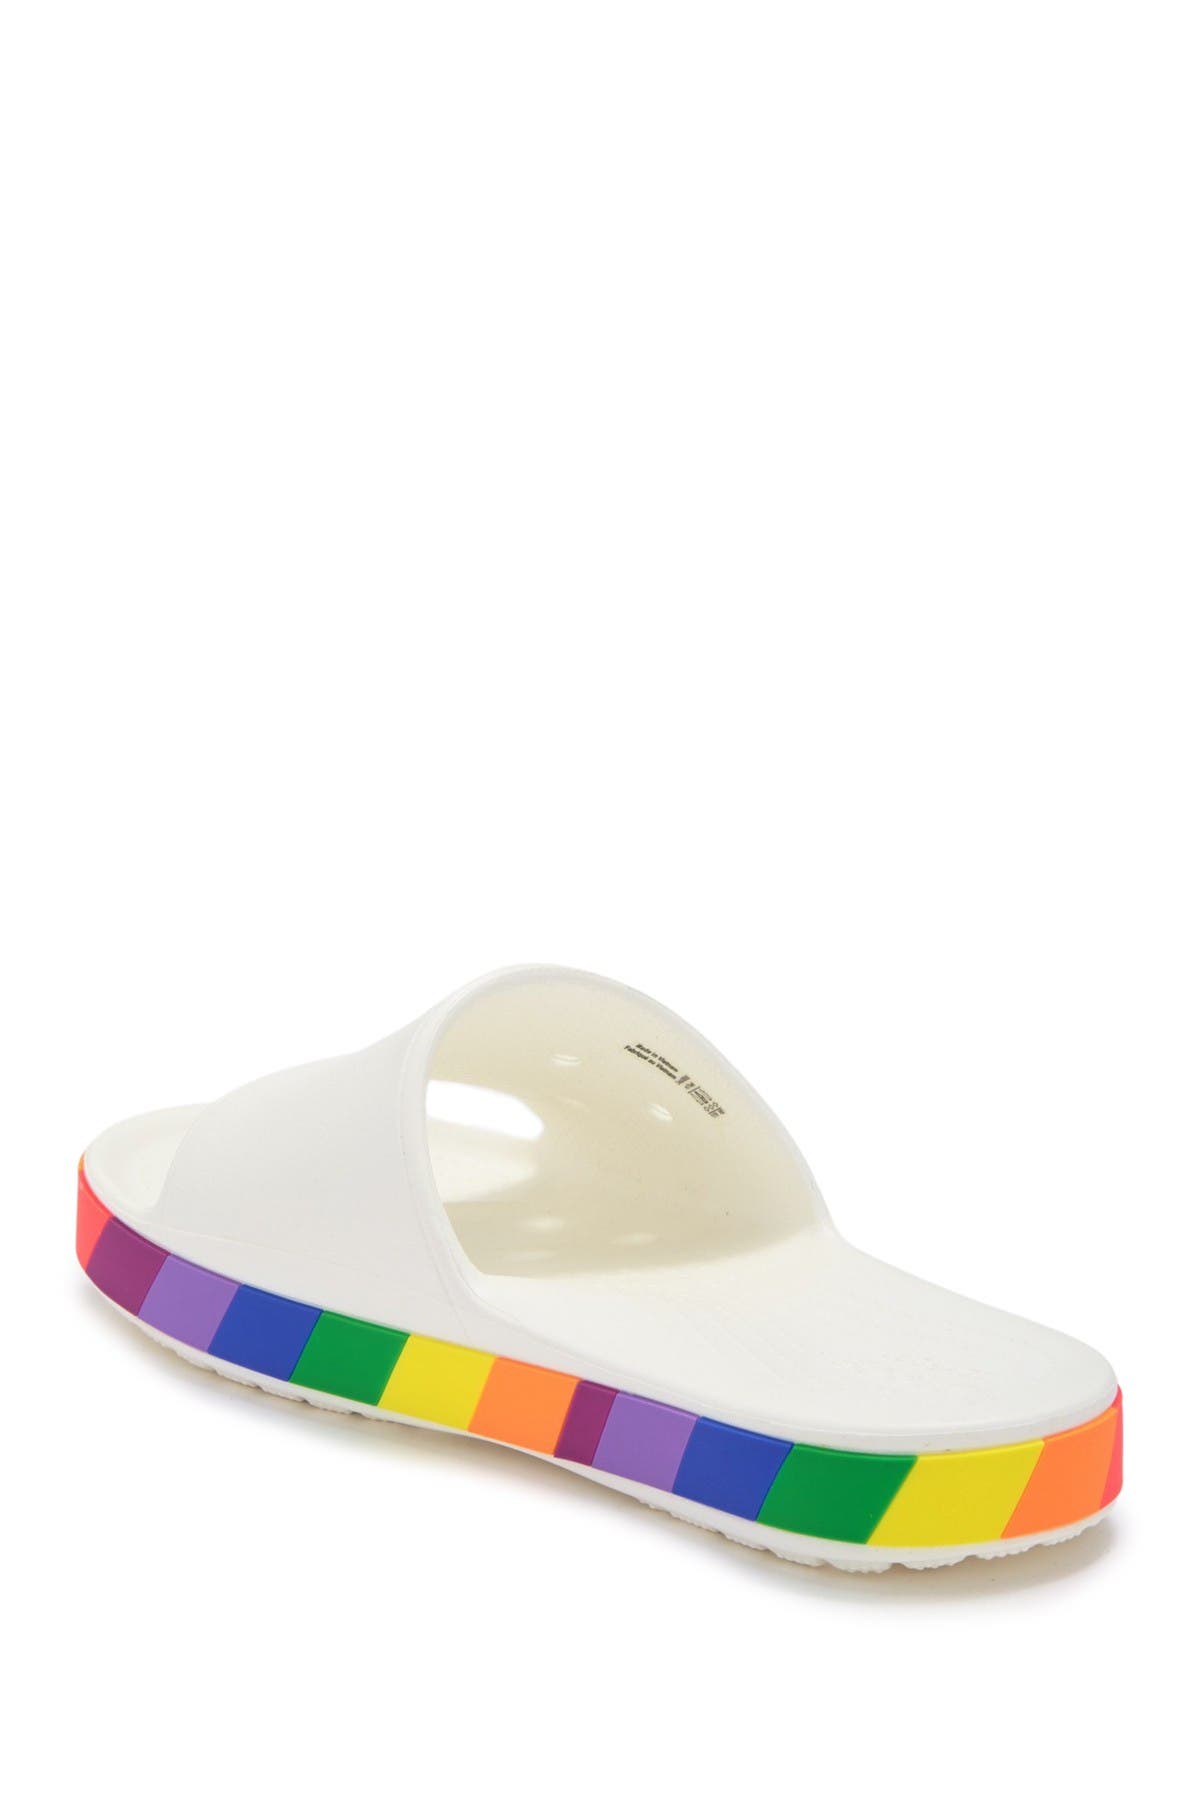 crocs rainbow slide sandals